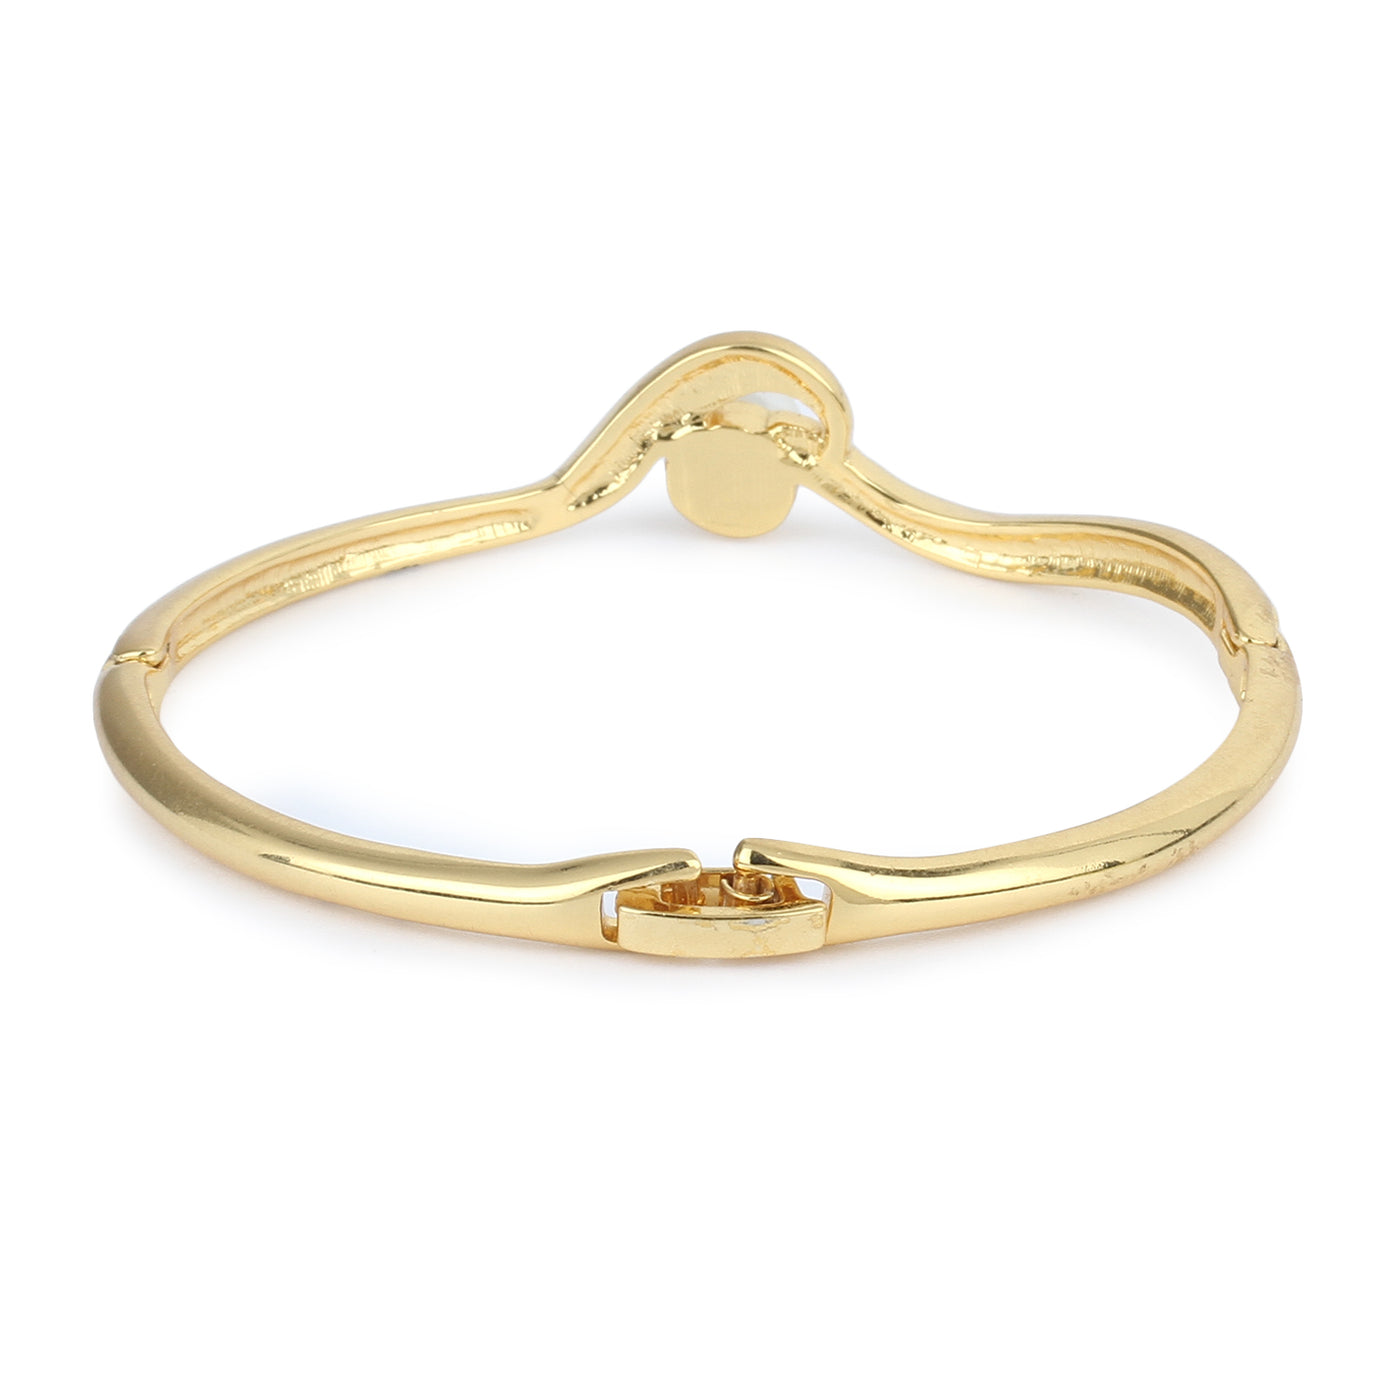 Estele Gold Plated Pearl Bracelet for women